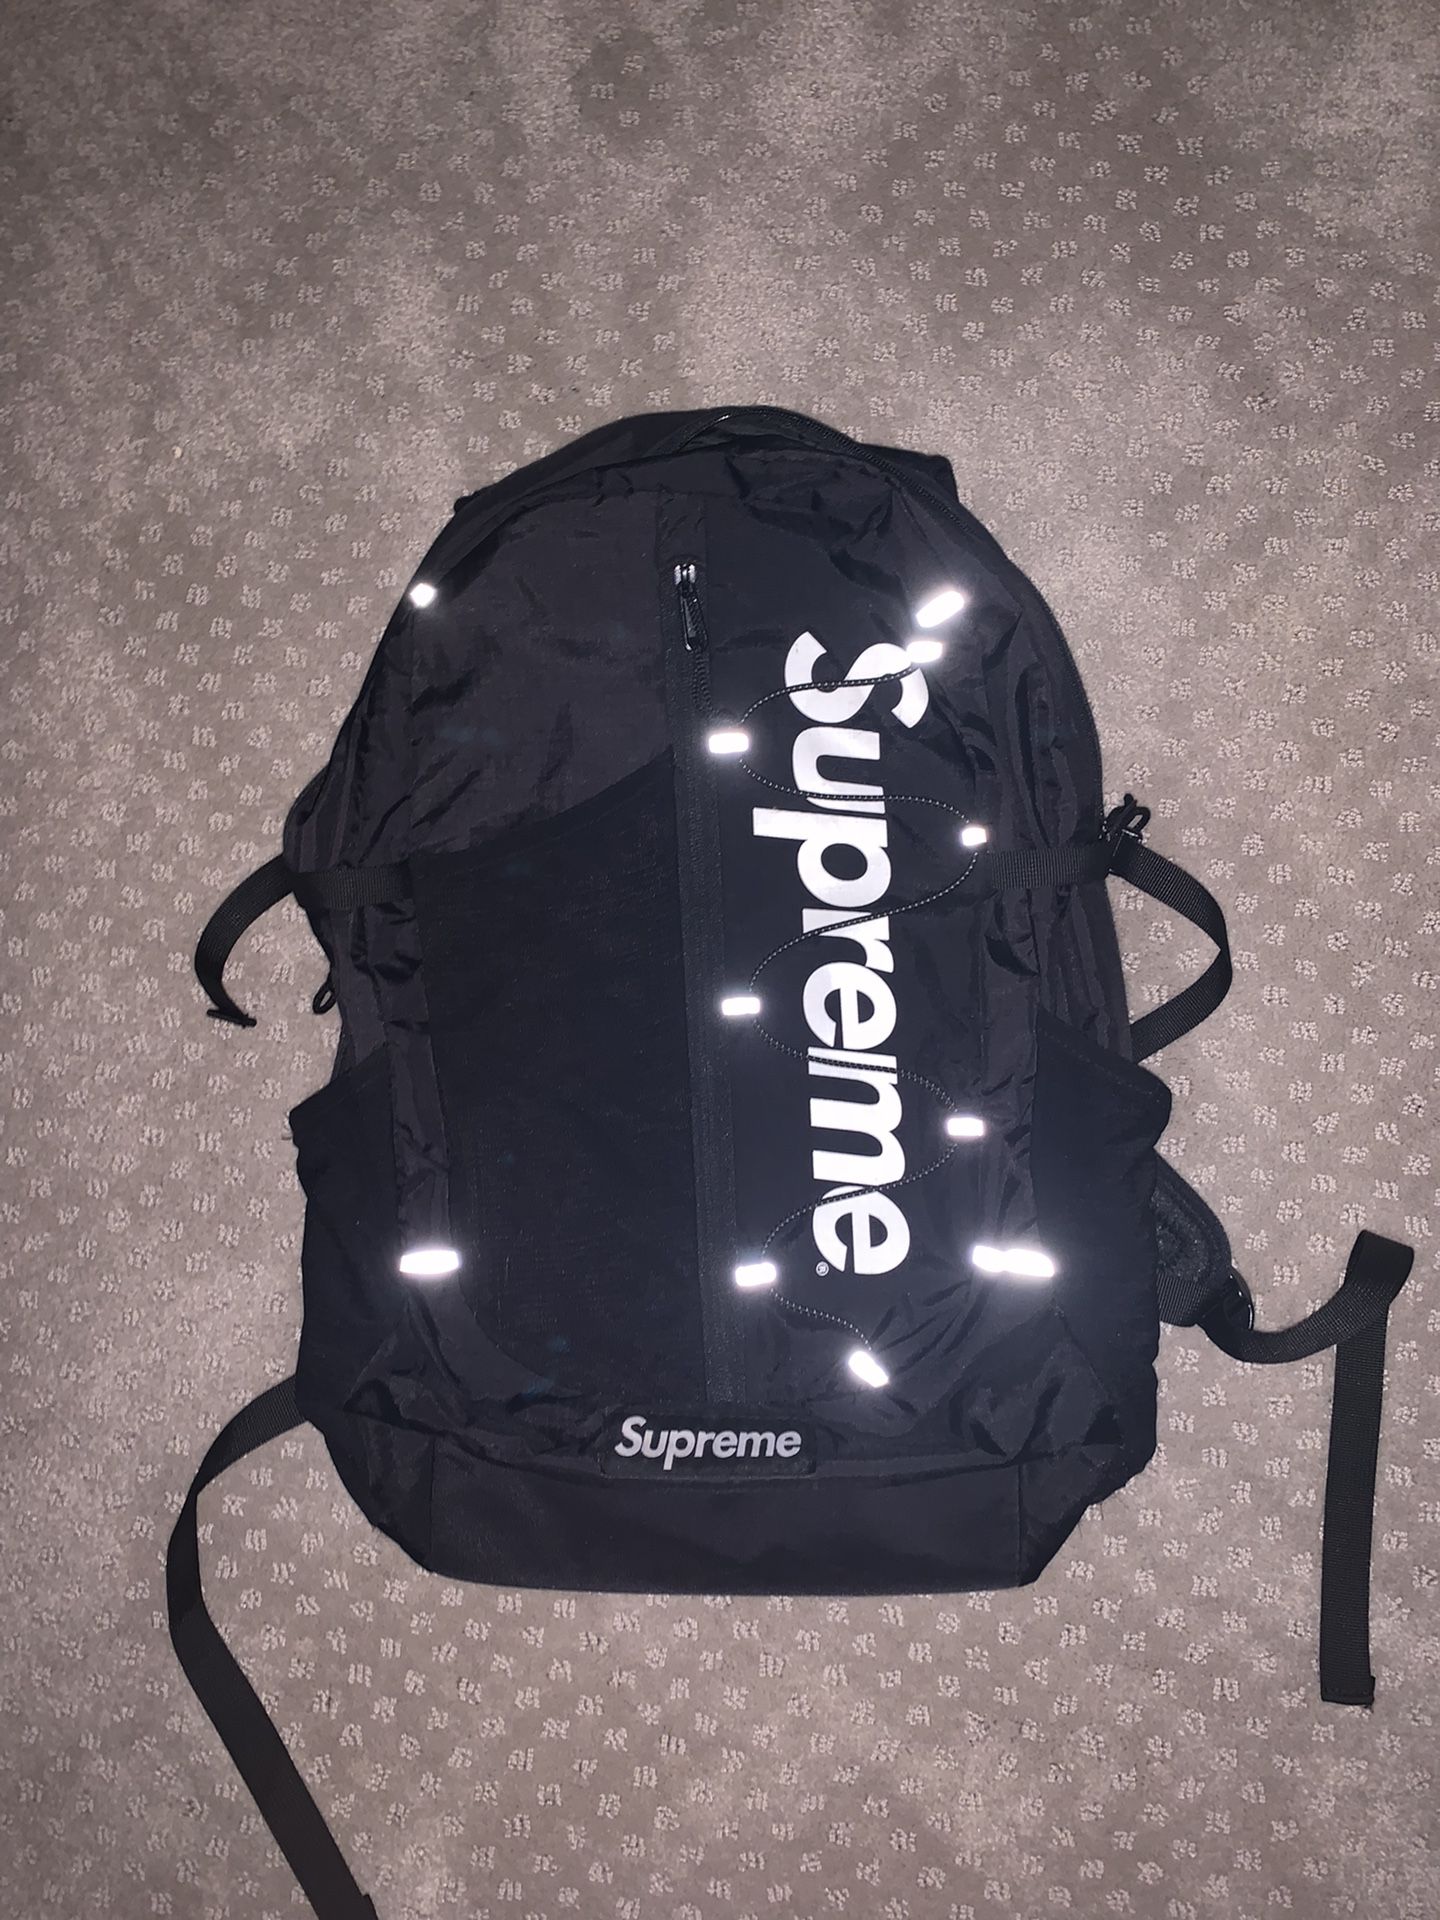 Supreme SS17 Backpack 